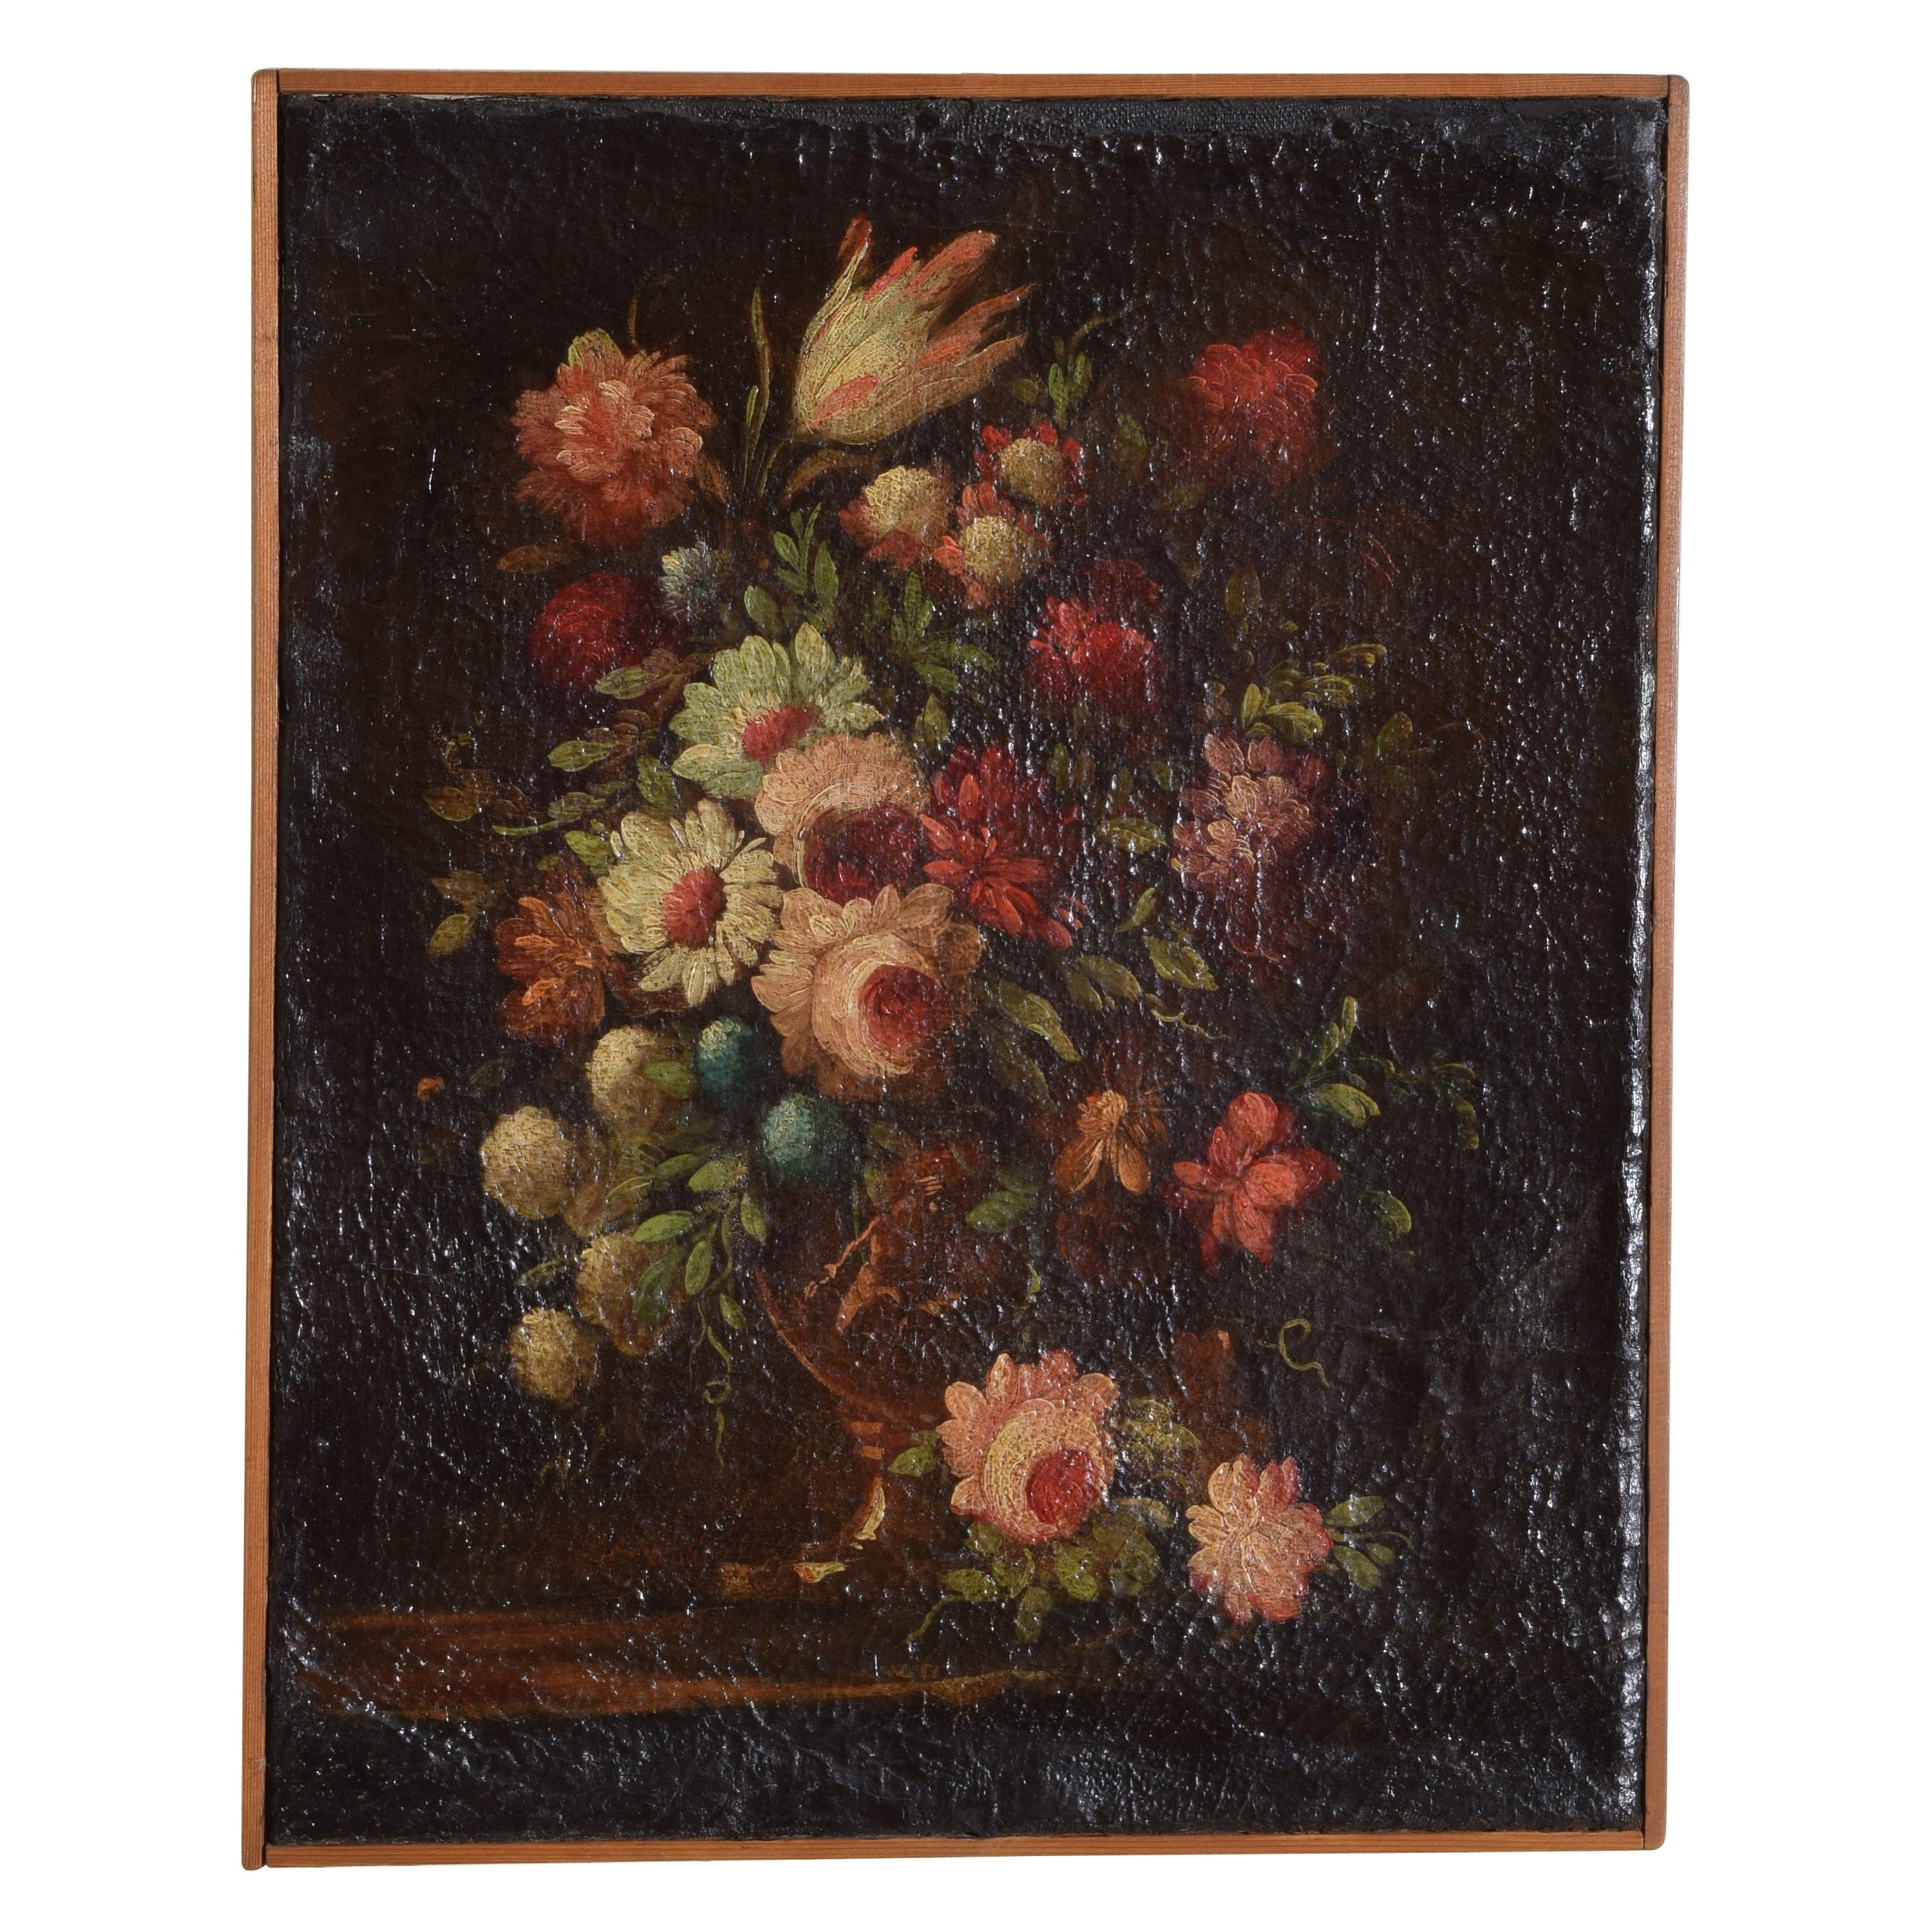 Italian, Genovese School, Oil on Canvas, Floral Still Life, mid 18th century